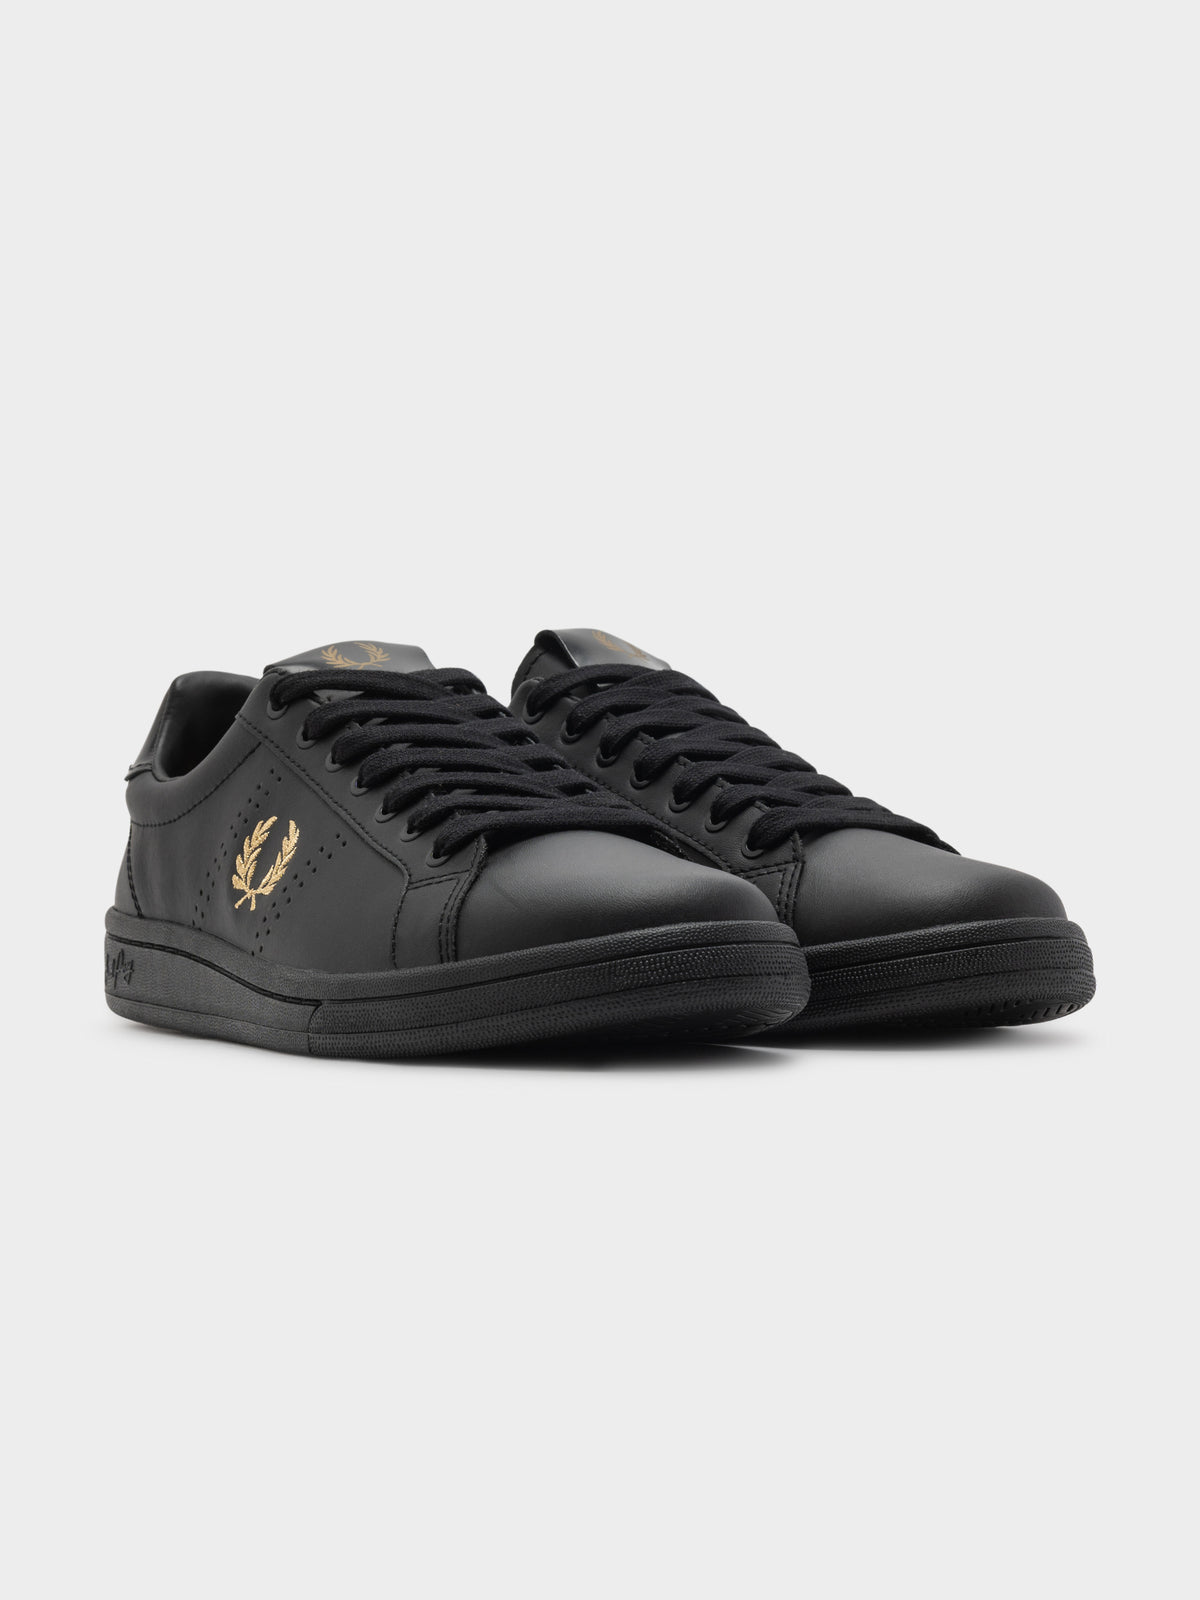 Mens B721 Leather Tab Sneaker in Black &amp; Gold